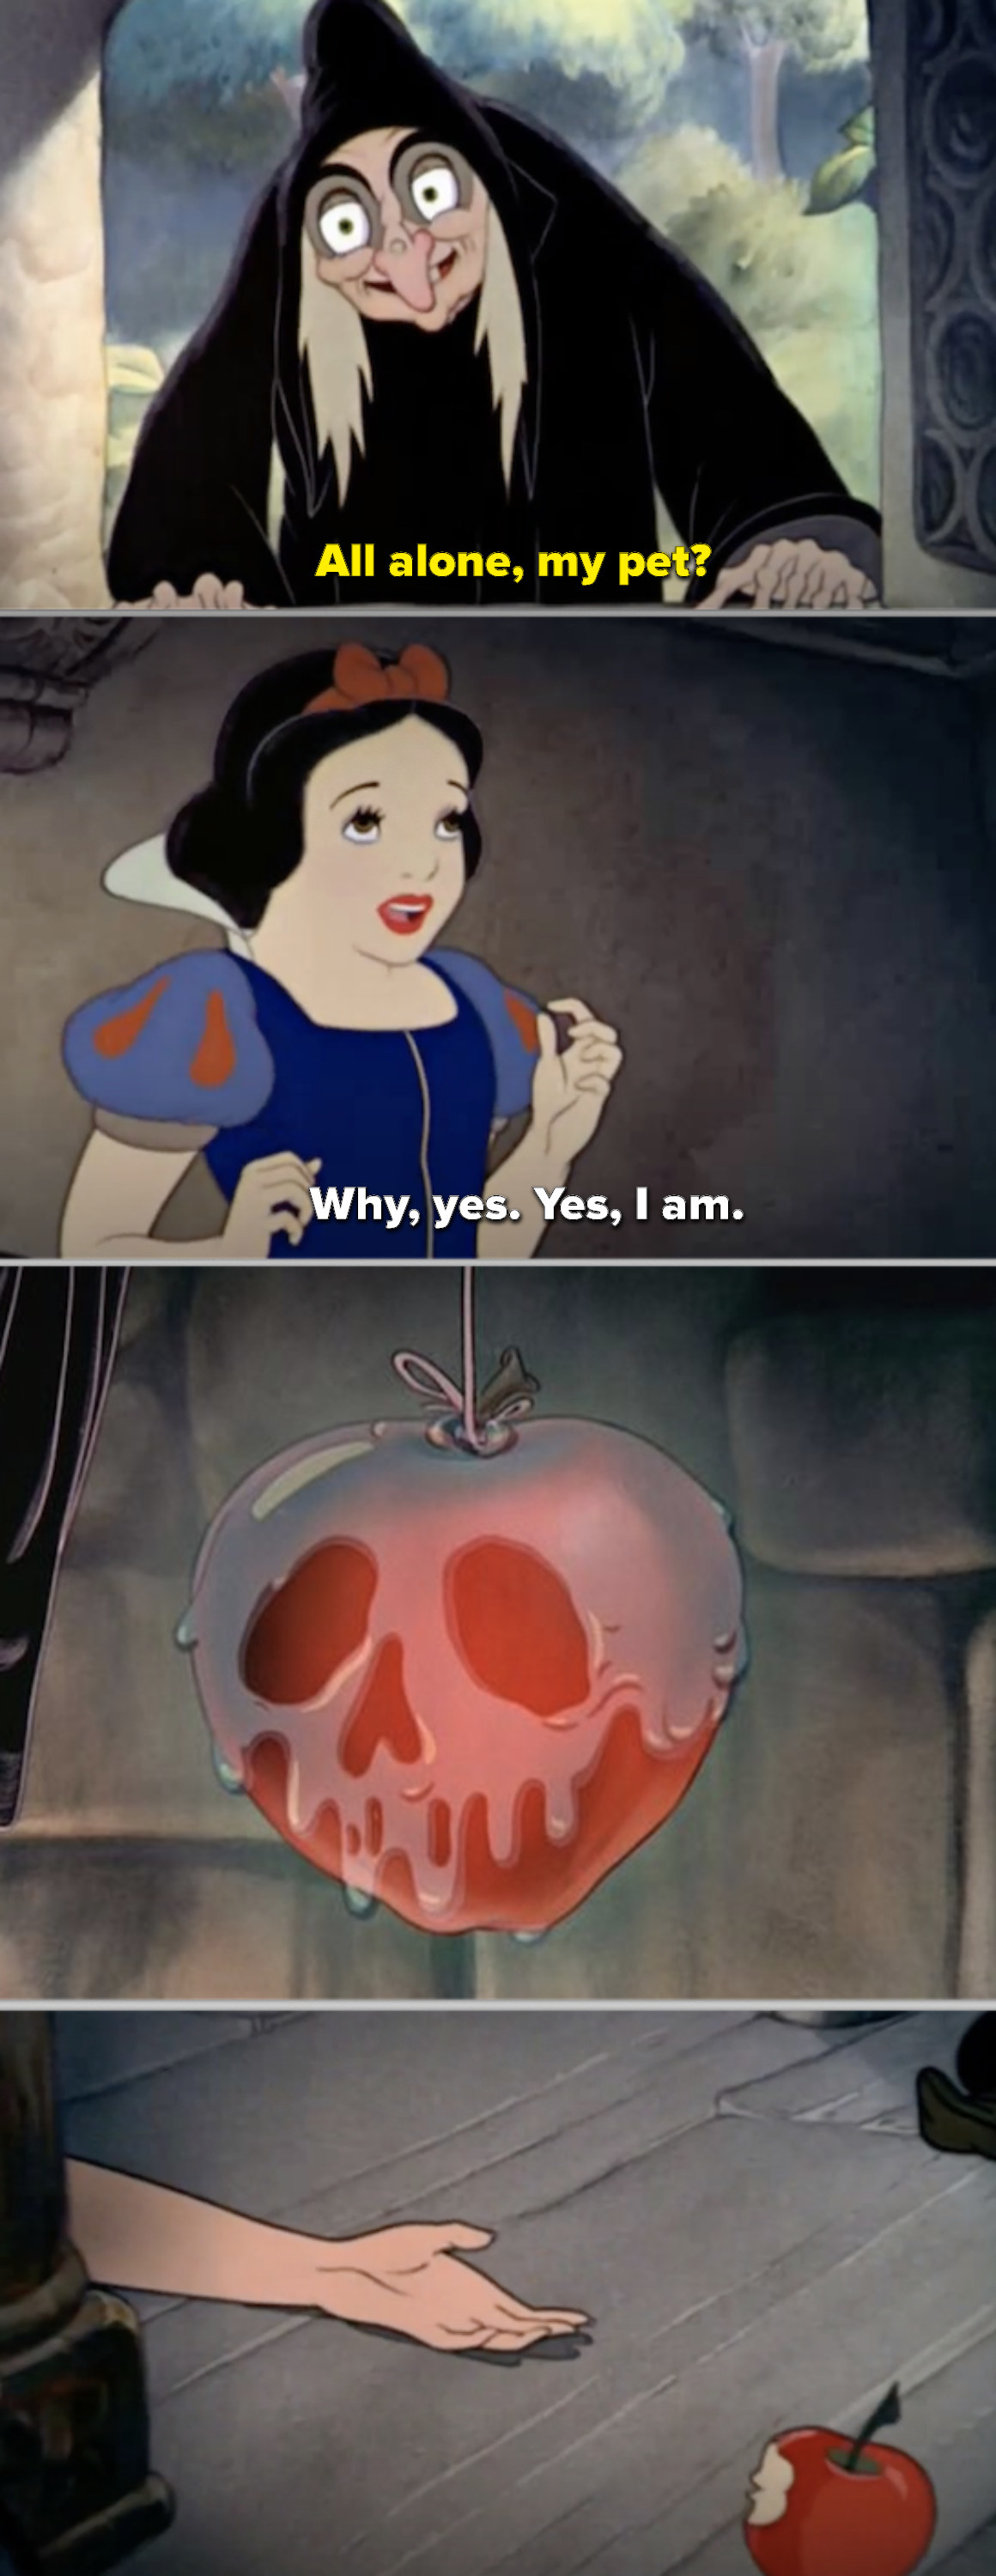 Snow White eating the poison apple